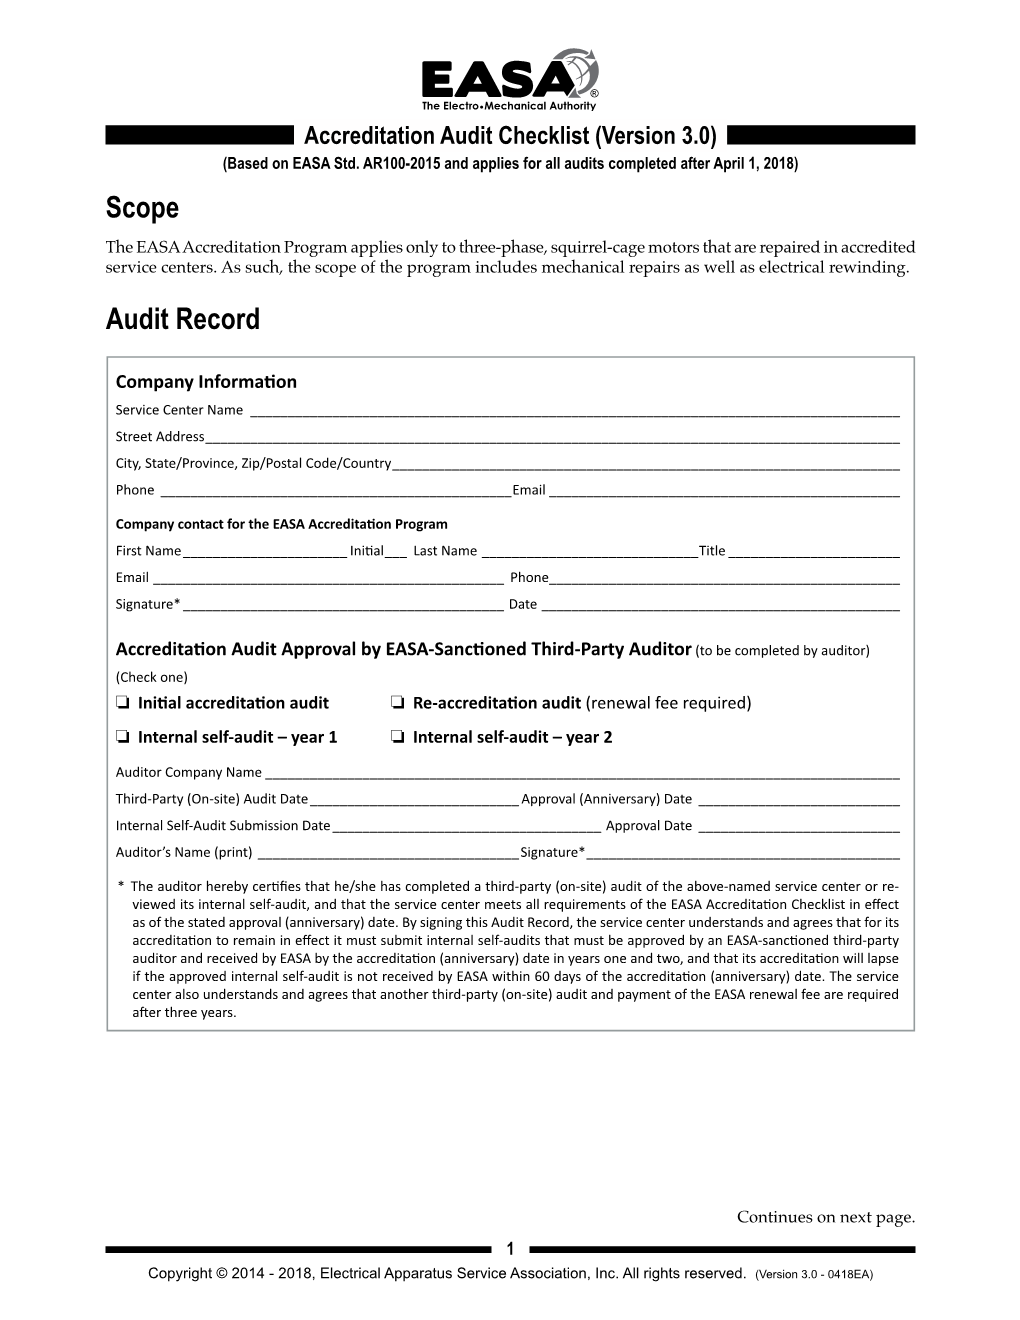 Accreditation Audit Checklist (Version 3.0) (Based on EASA Std